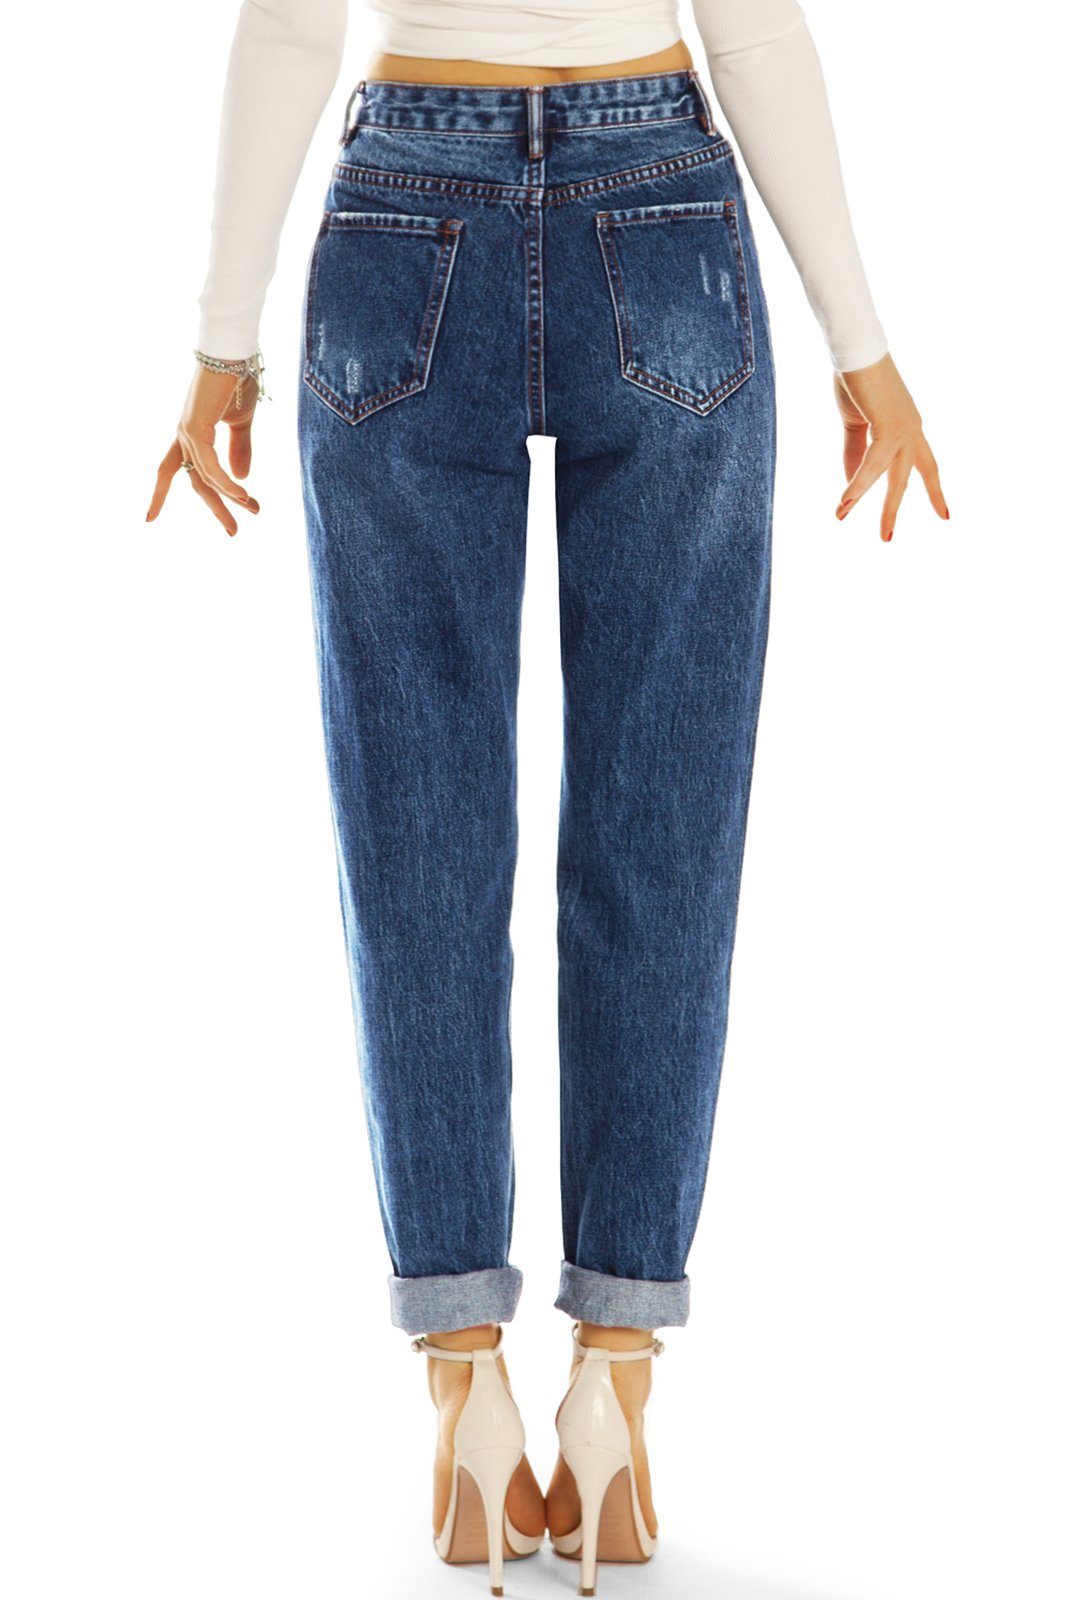 - High Locker Waist, styled High 5-Pocket-Style be Hose Mom-Jeans Boyfriend - Waist j15f-1 Damen Bequem Jeans Destroyed - Mom